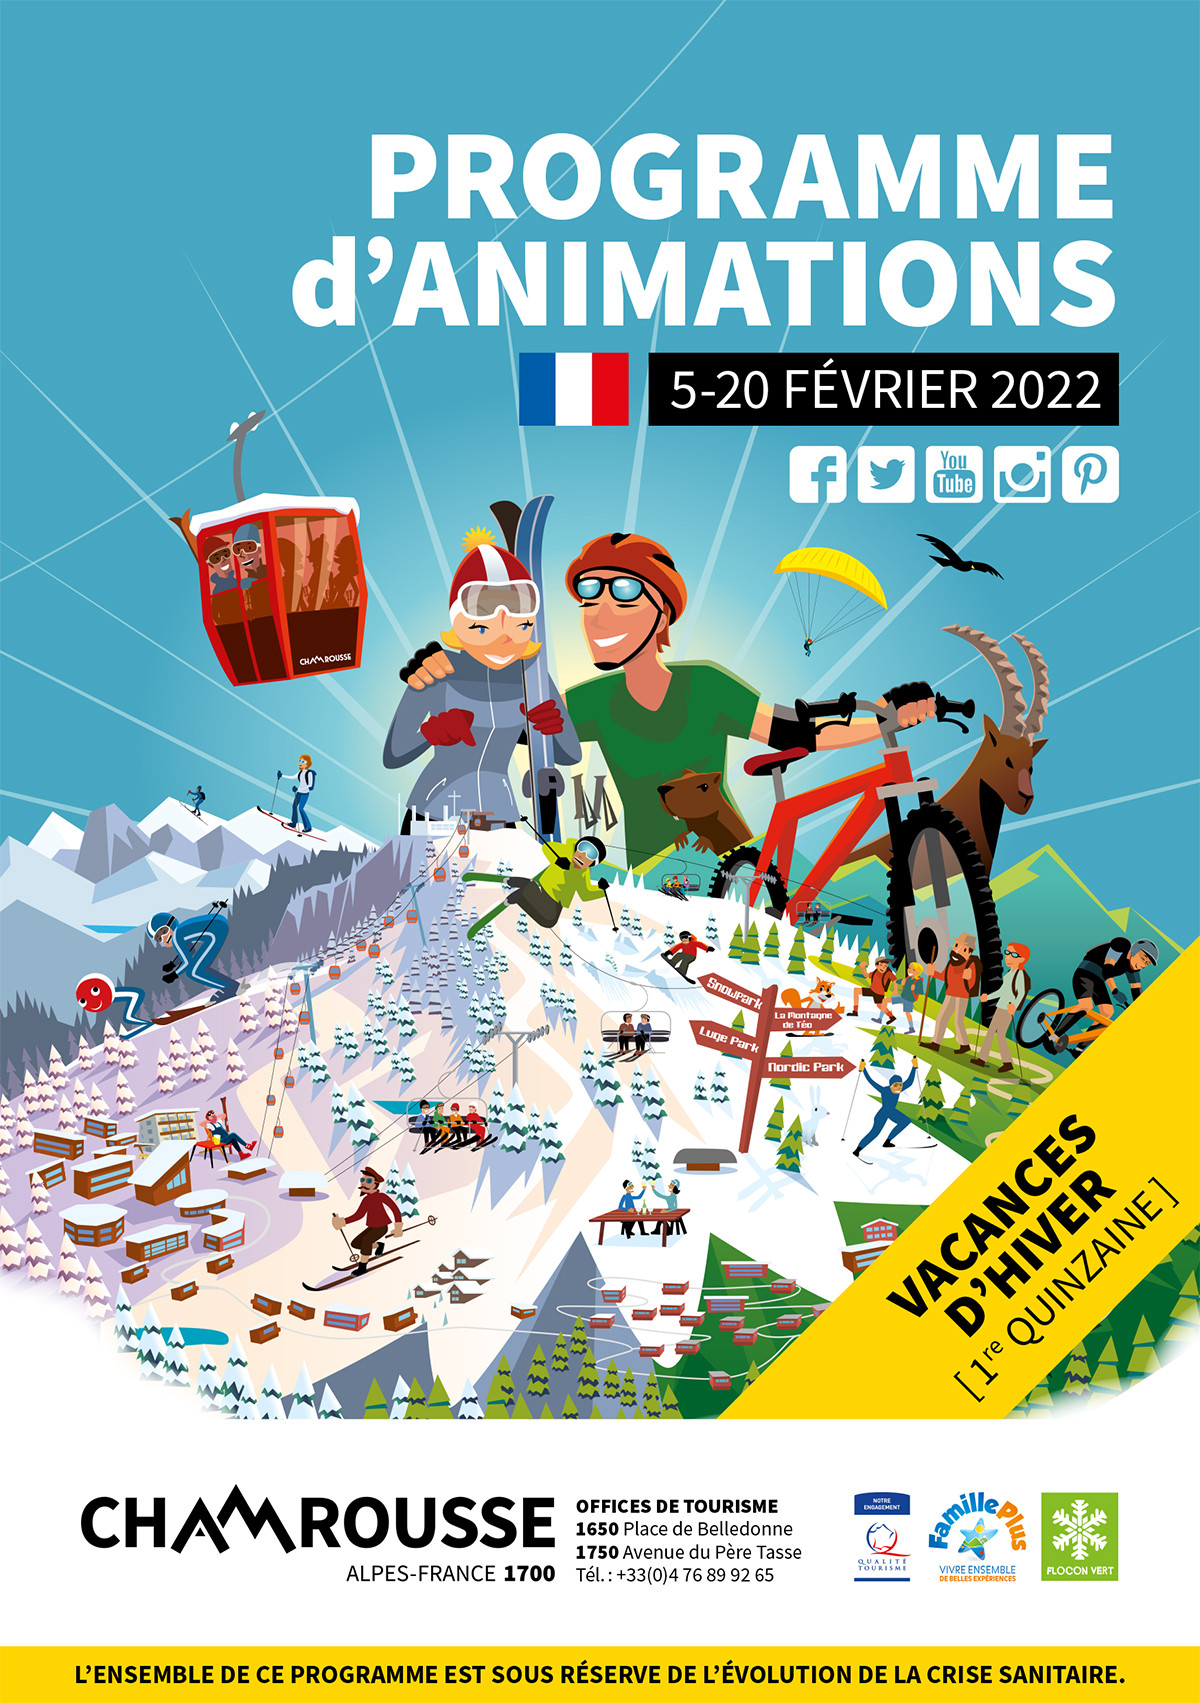 Chamrousse programme animation événement février 2022 station ski montagne isère alpes france